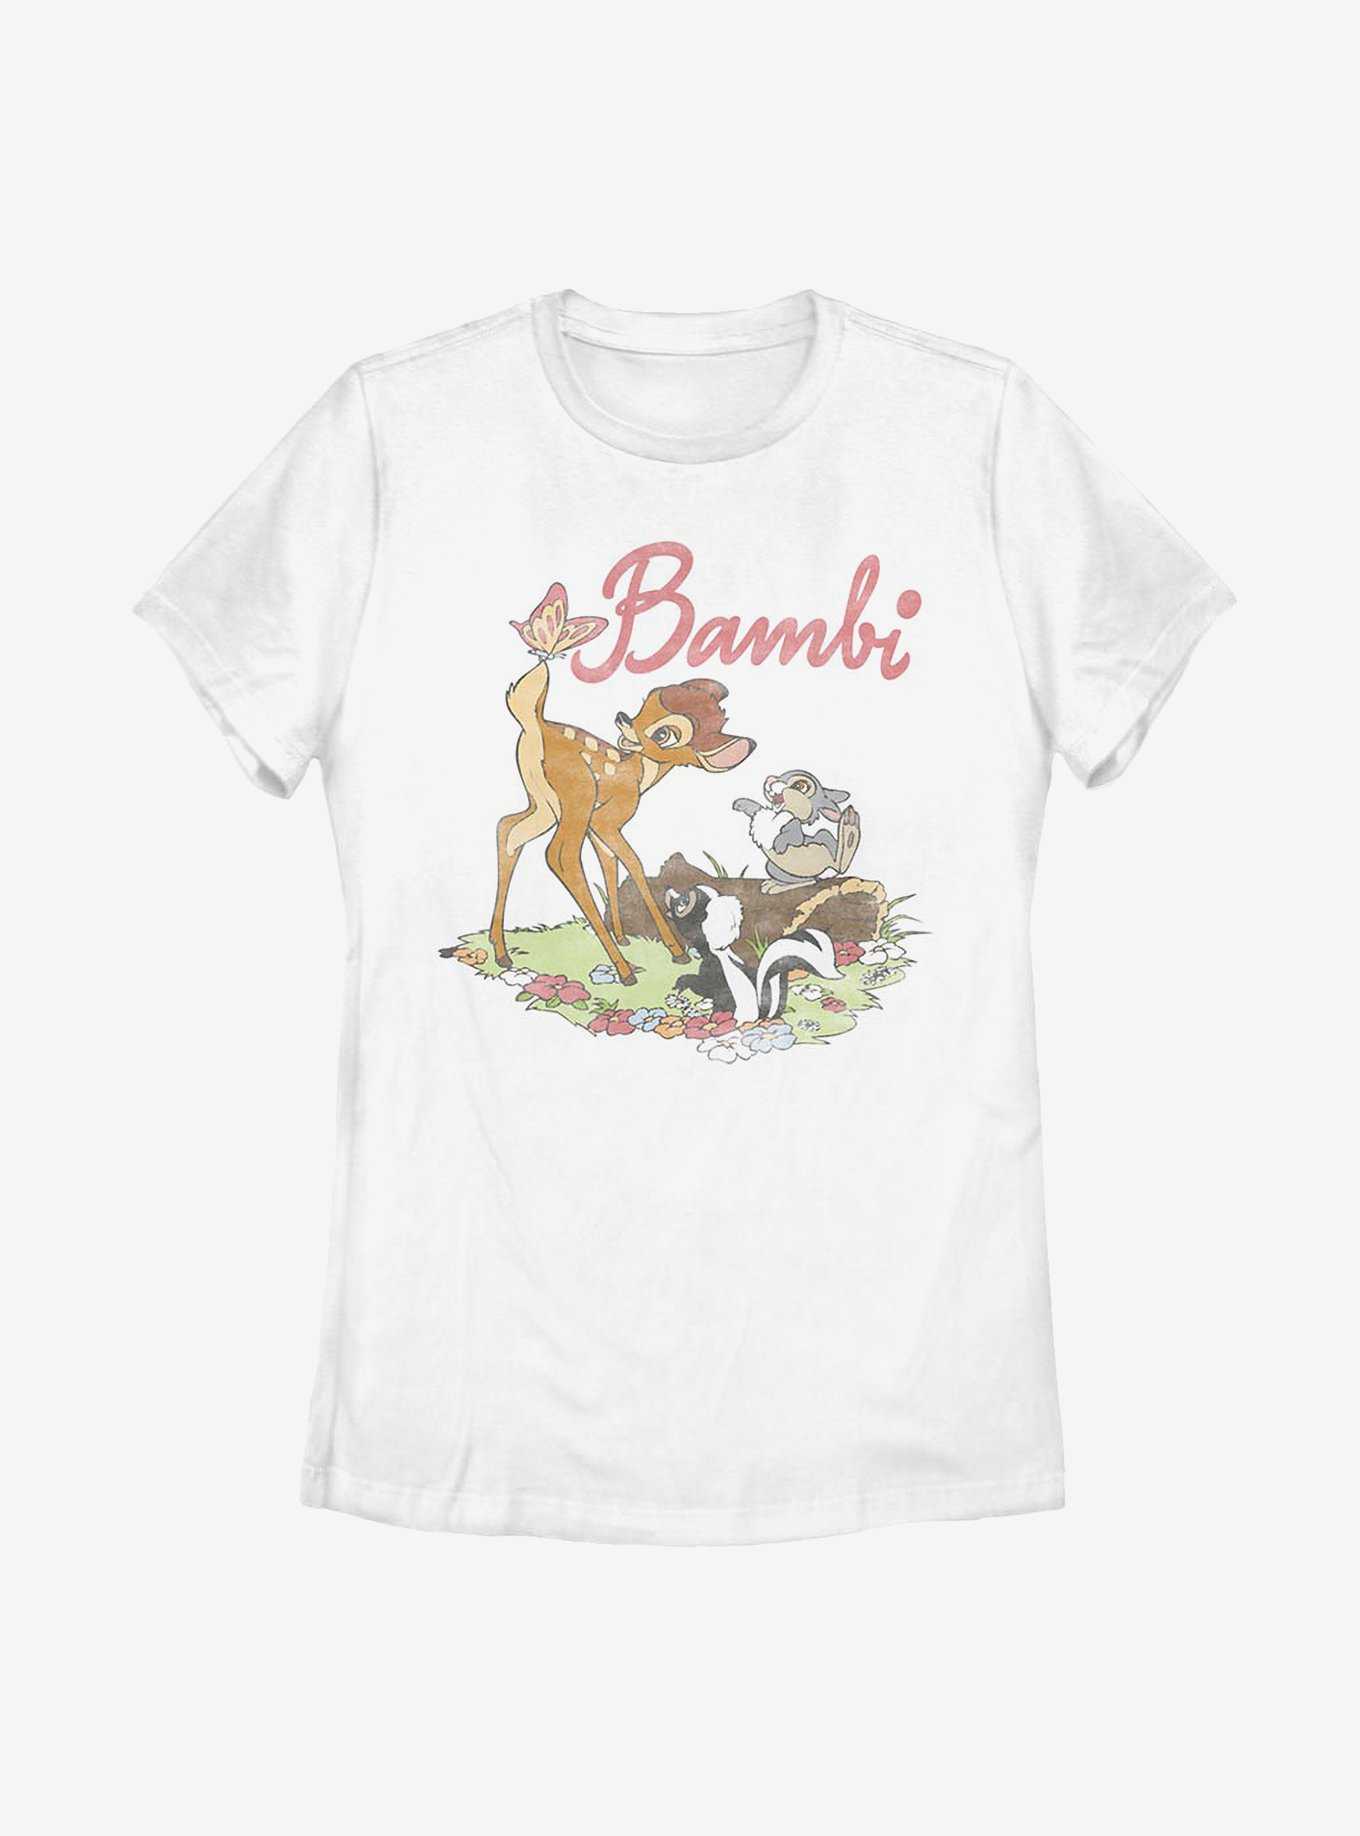 OFFICIAL Shirts, BoxLunch Bambi Plushes & Merch |